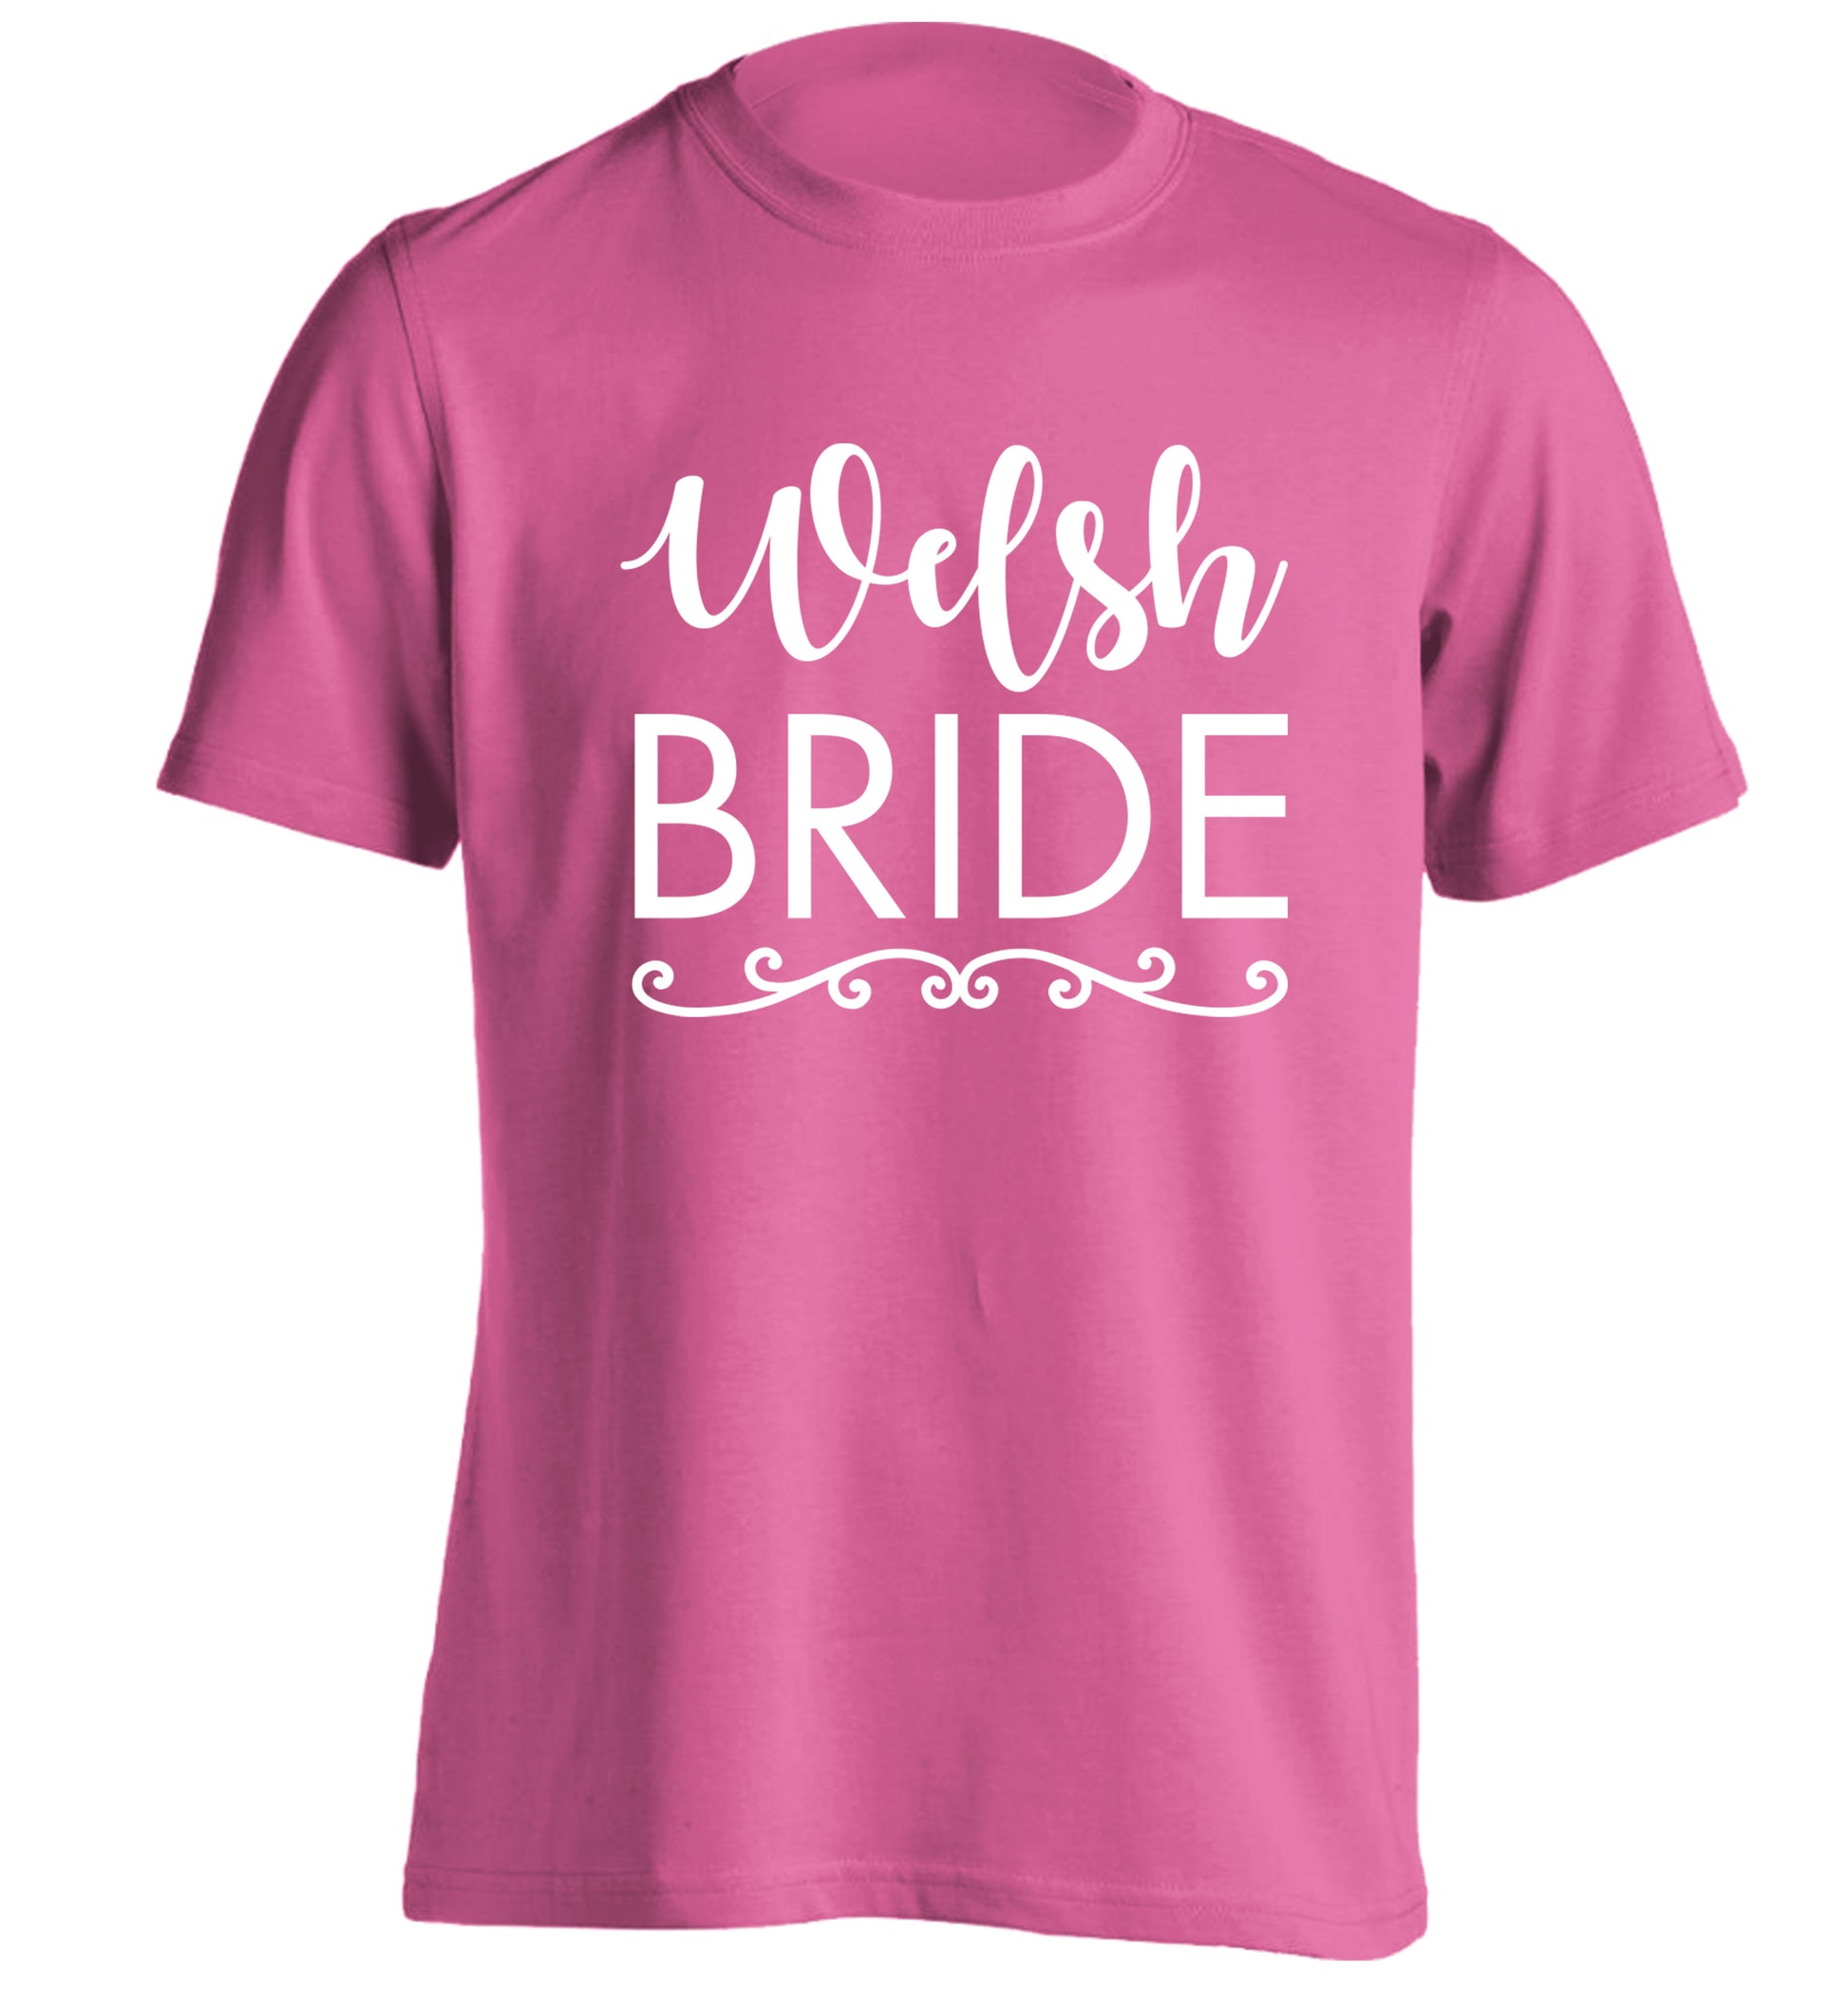 Welsh Bride adults unisex pink Tshirt 2XL